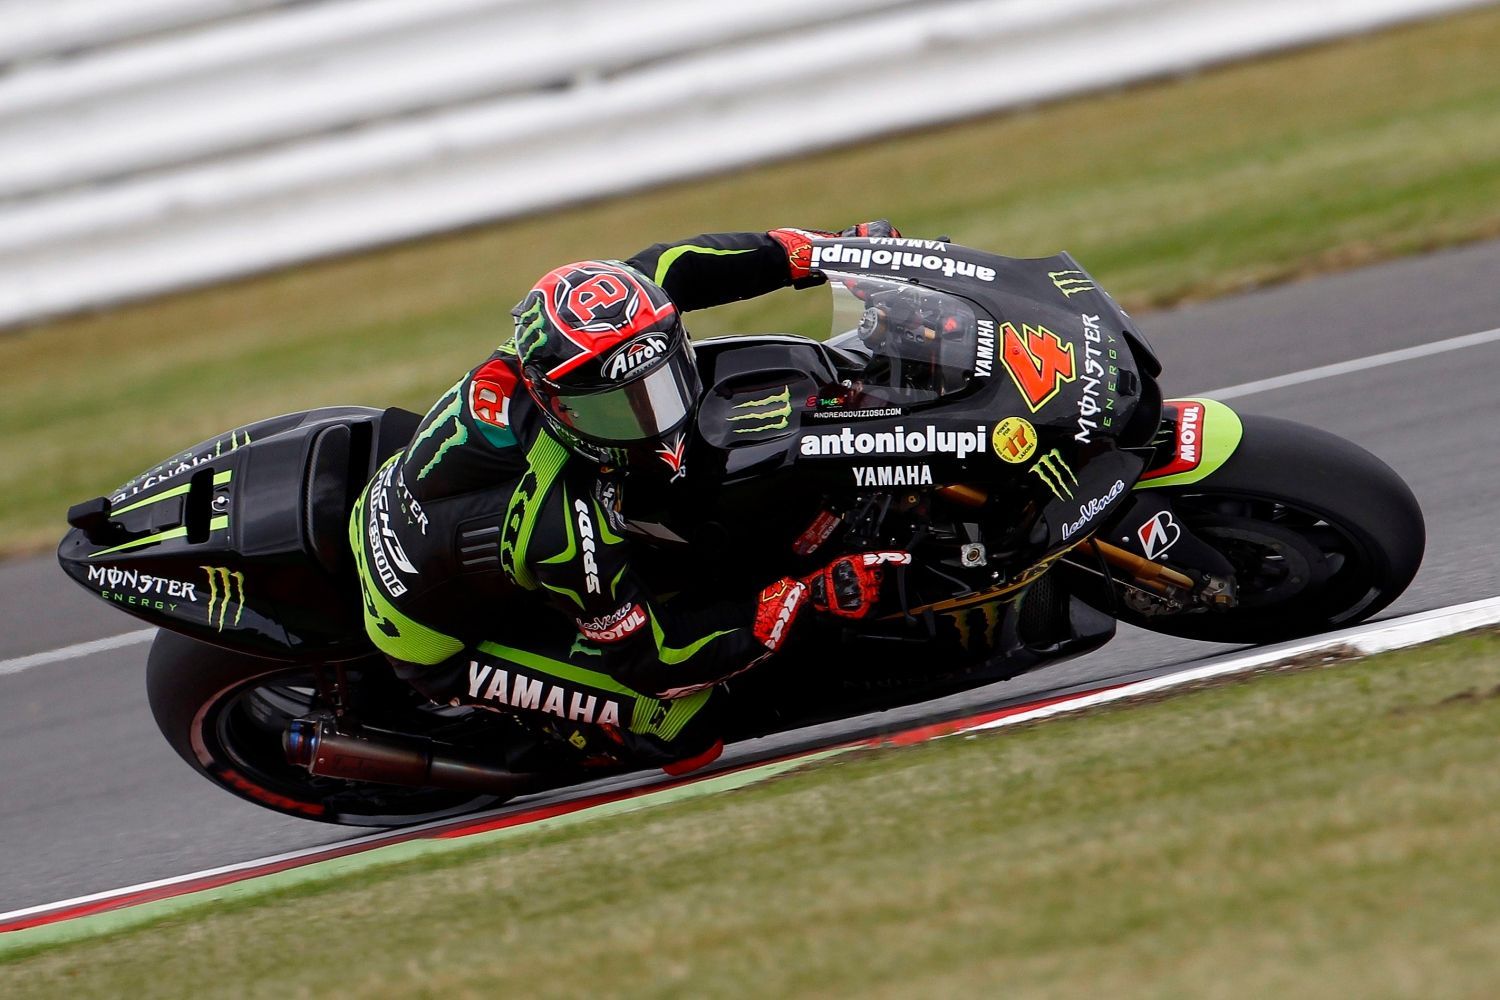 Italský motocyklový jezdec Yamahy Andrea Dovizioso v kategorii MotoGP na Grand Prix Velké Británie 2012